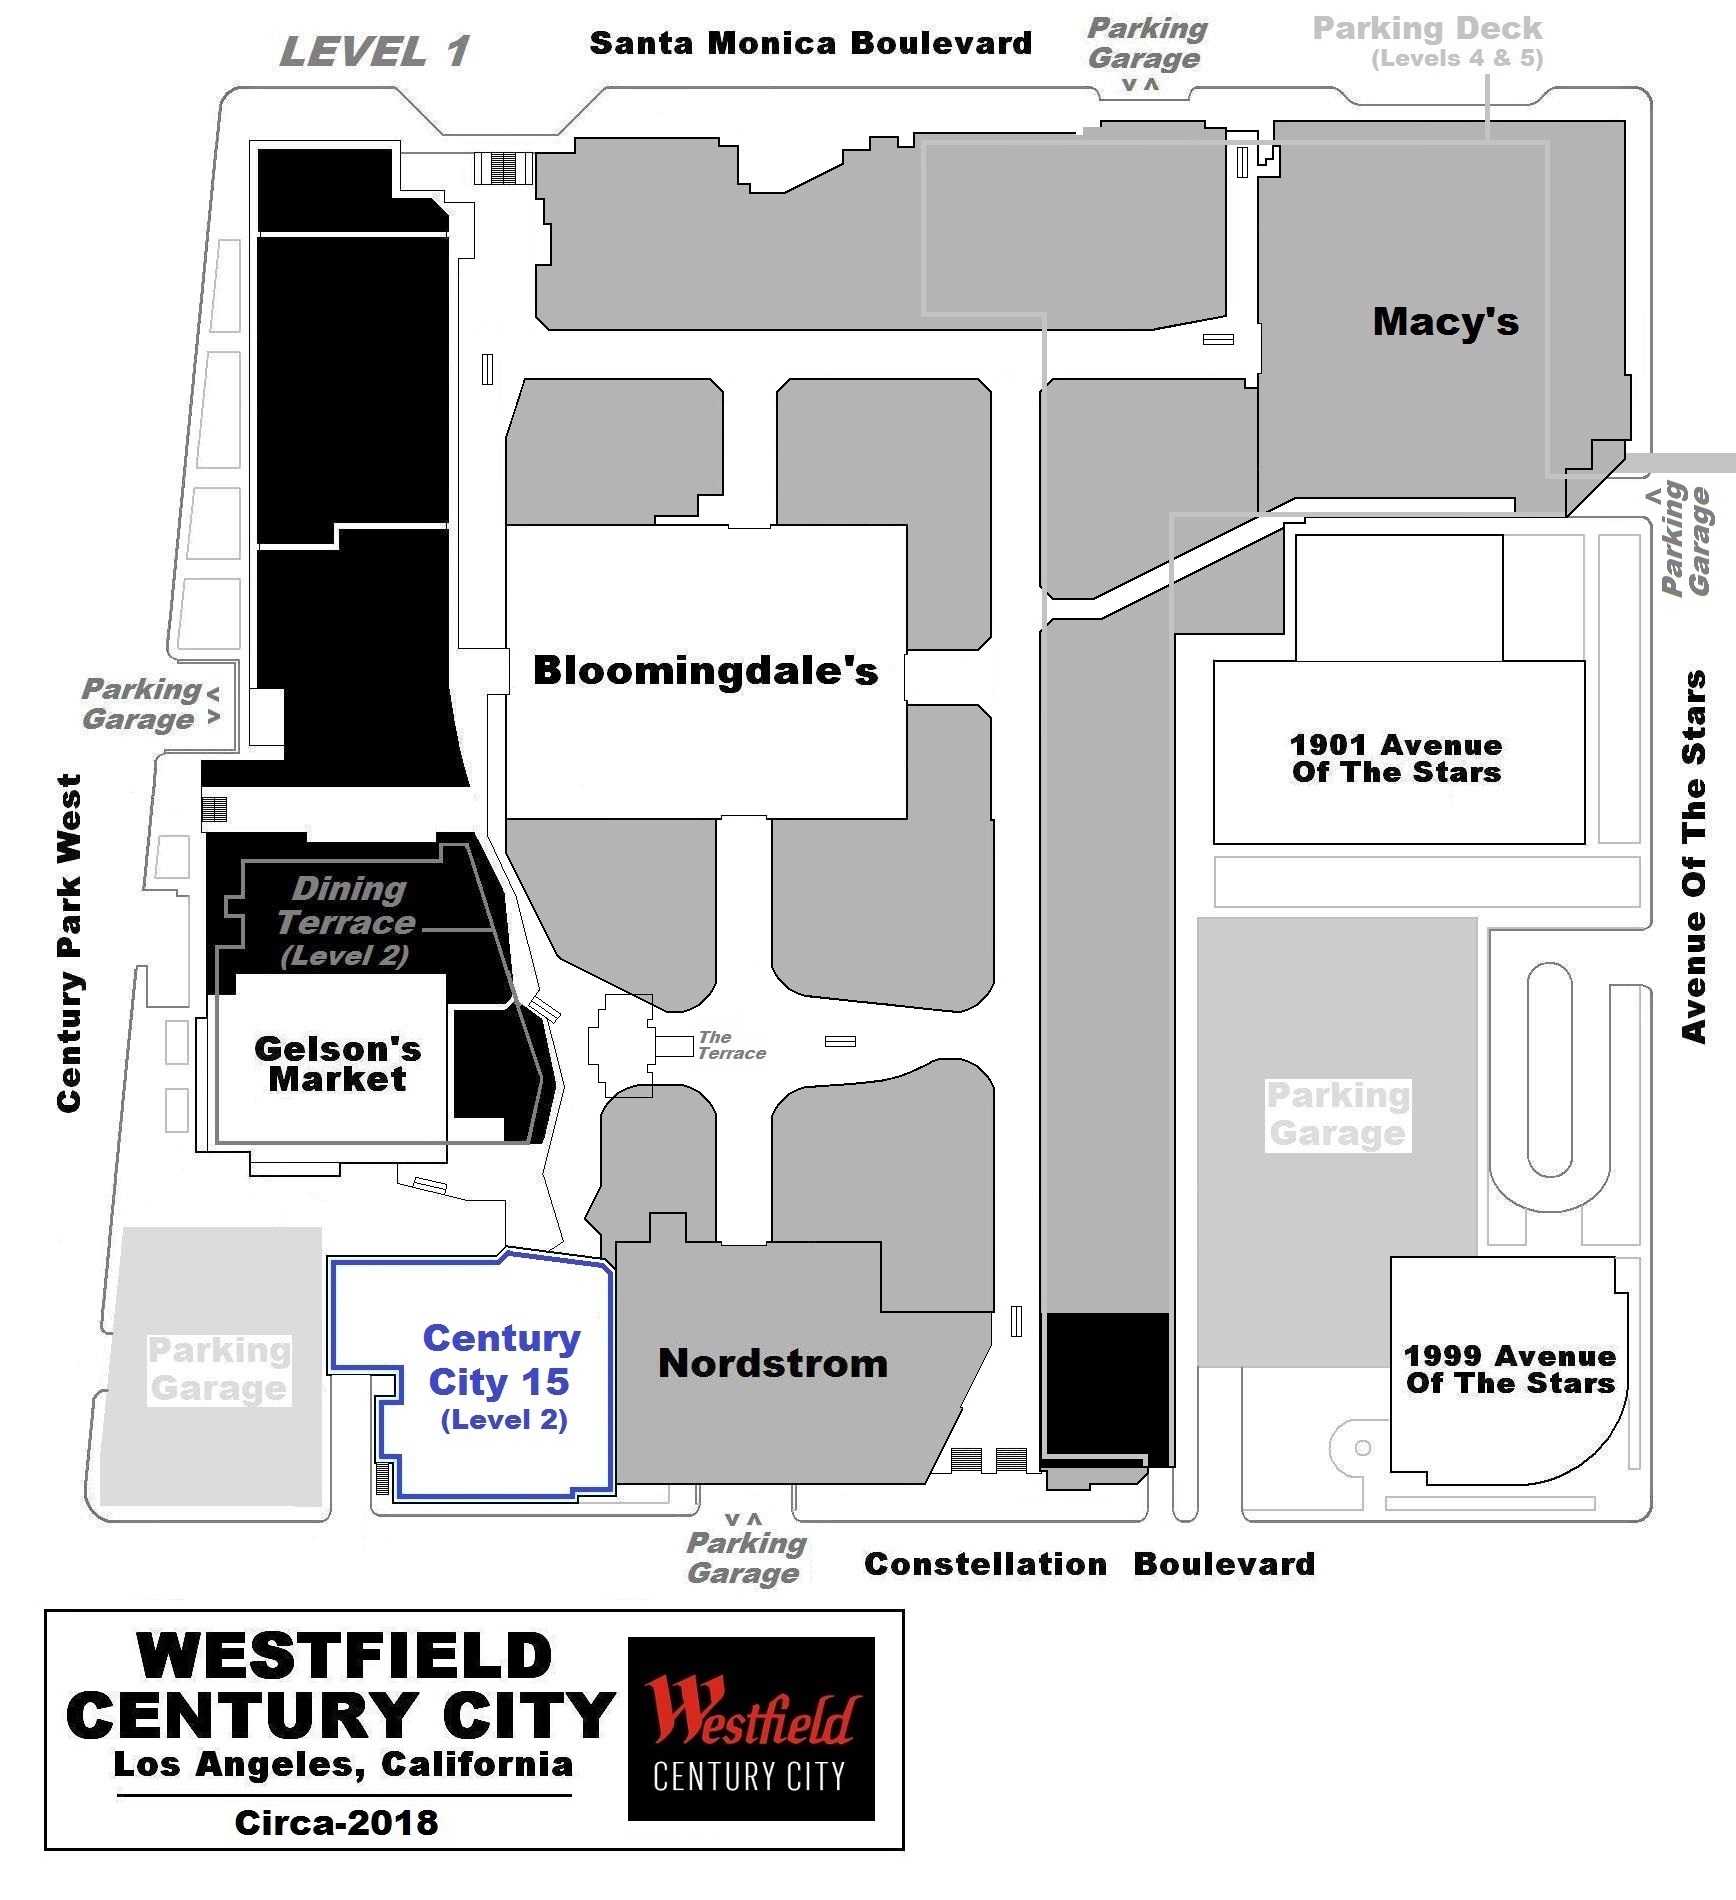 Westfield Culver City - Wikipedia